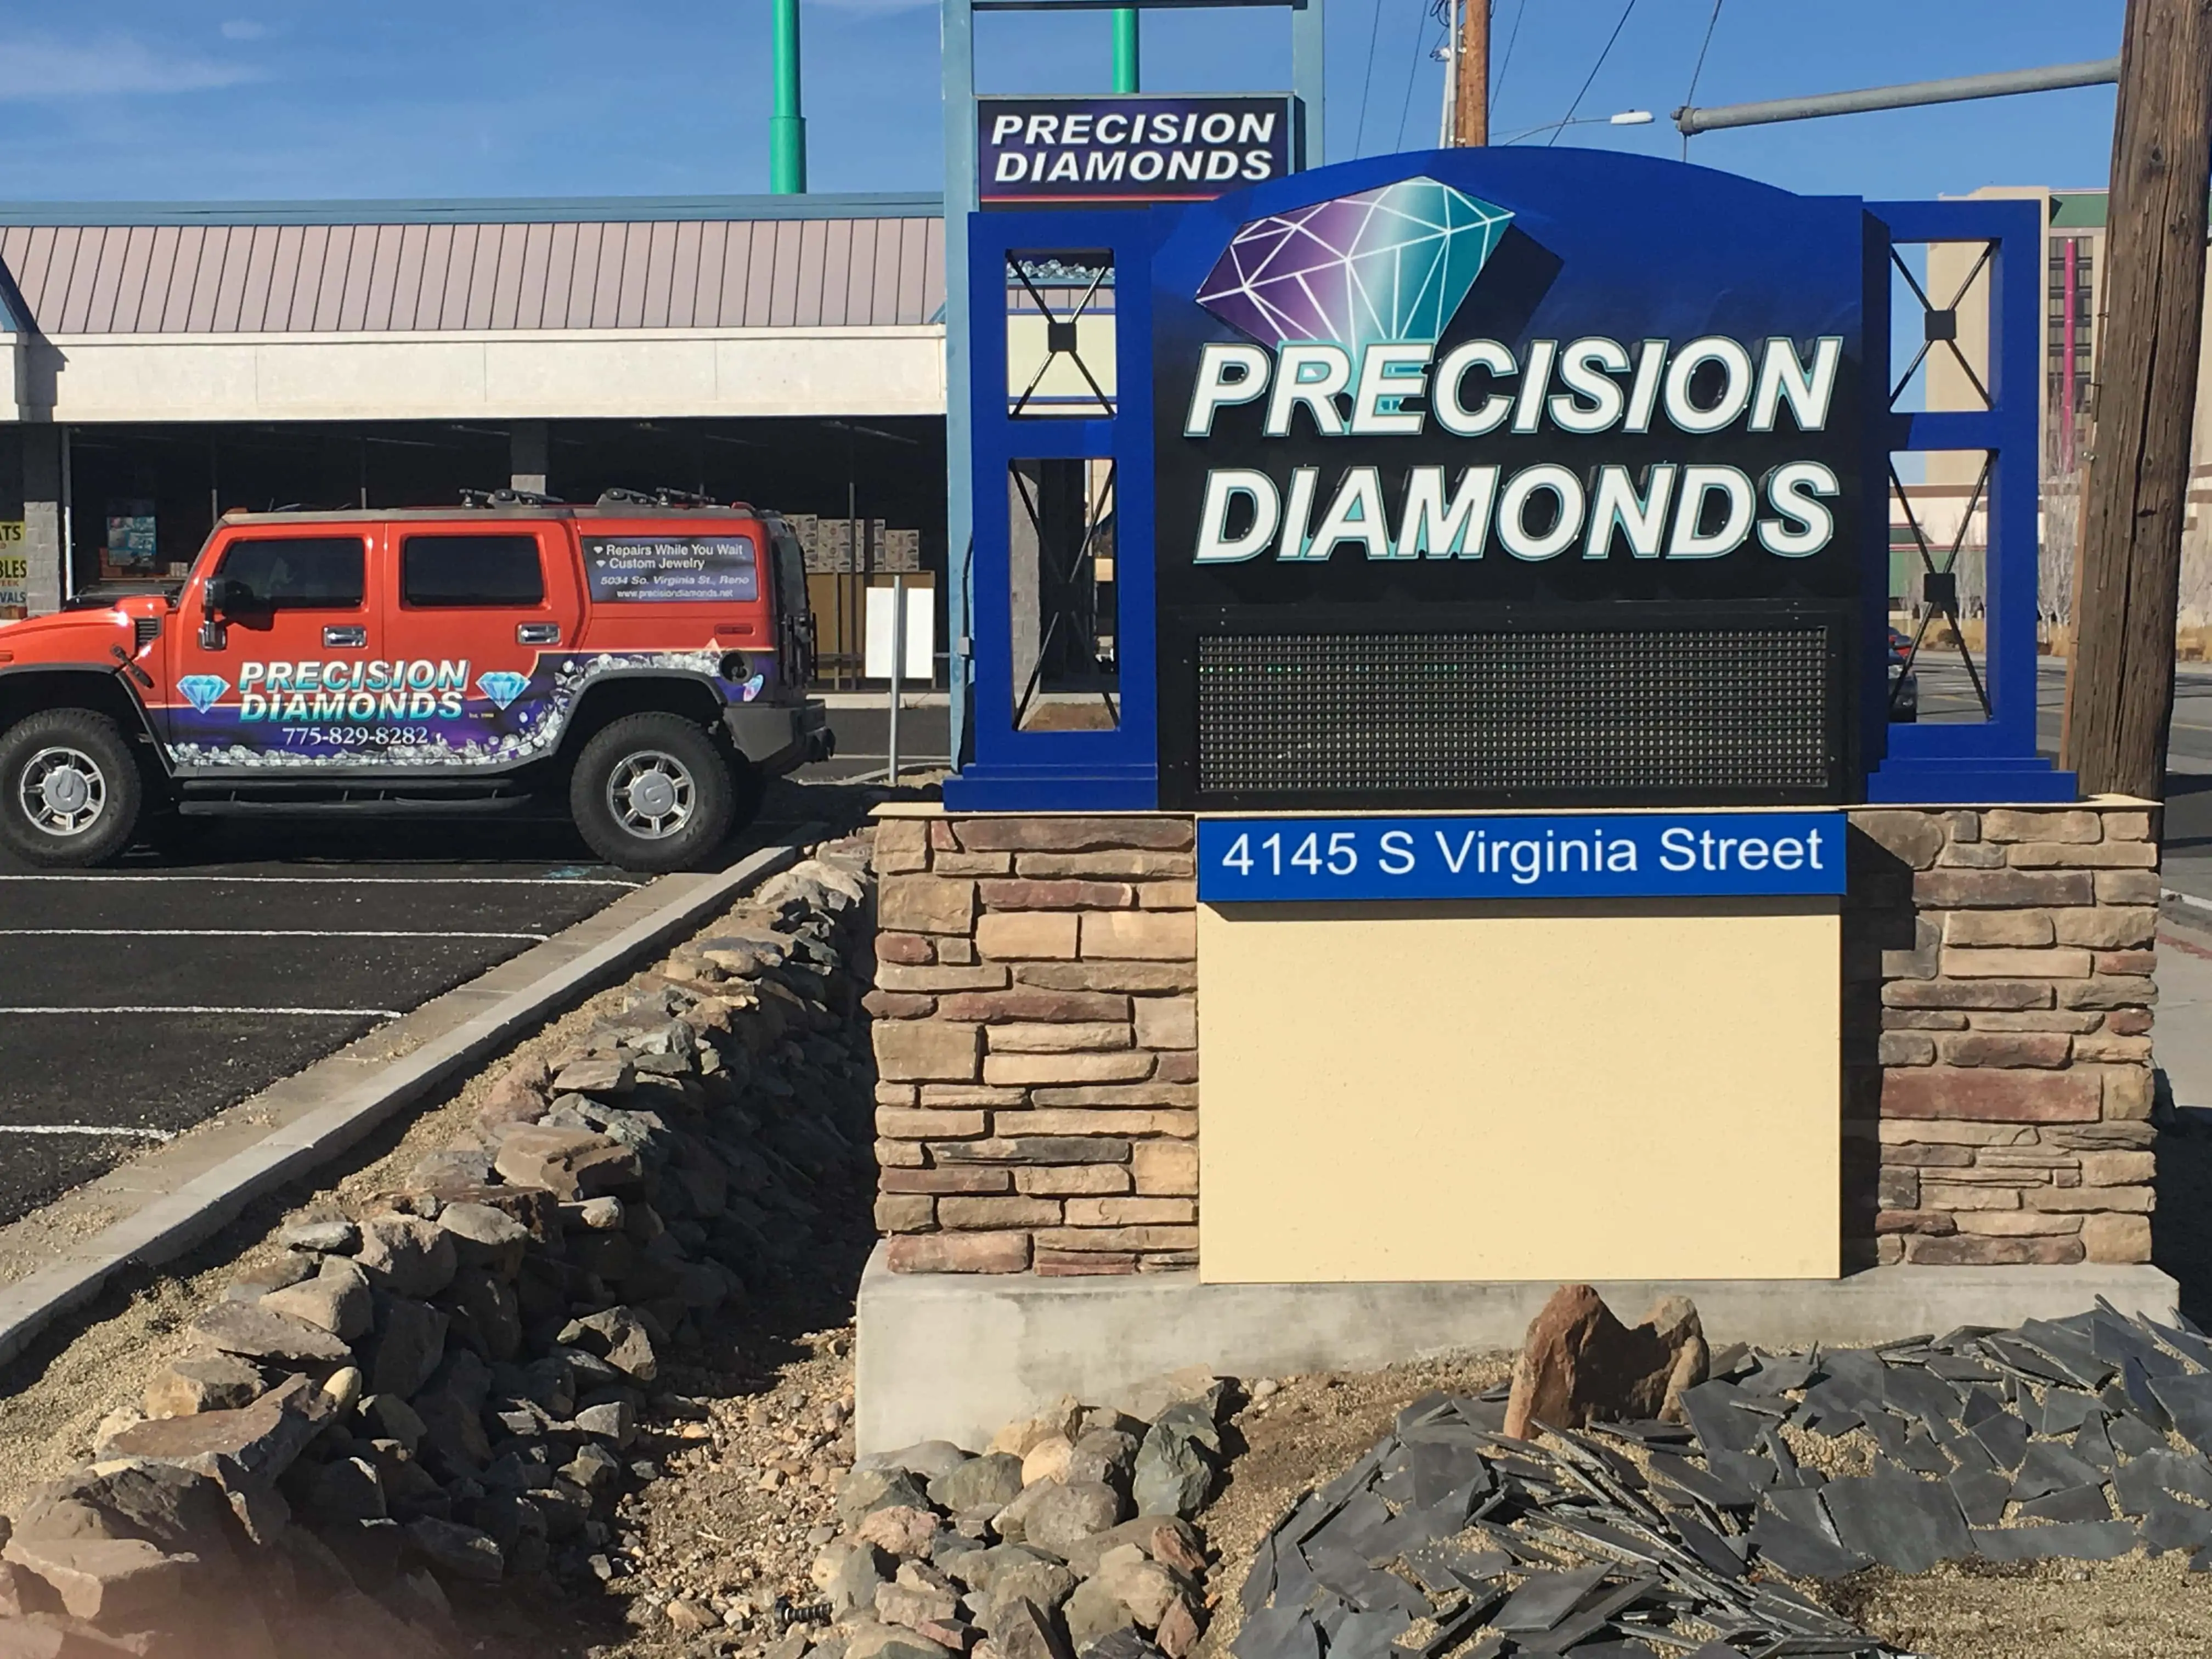 Precision Diamonds Jewelry Store Sign